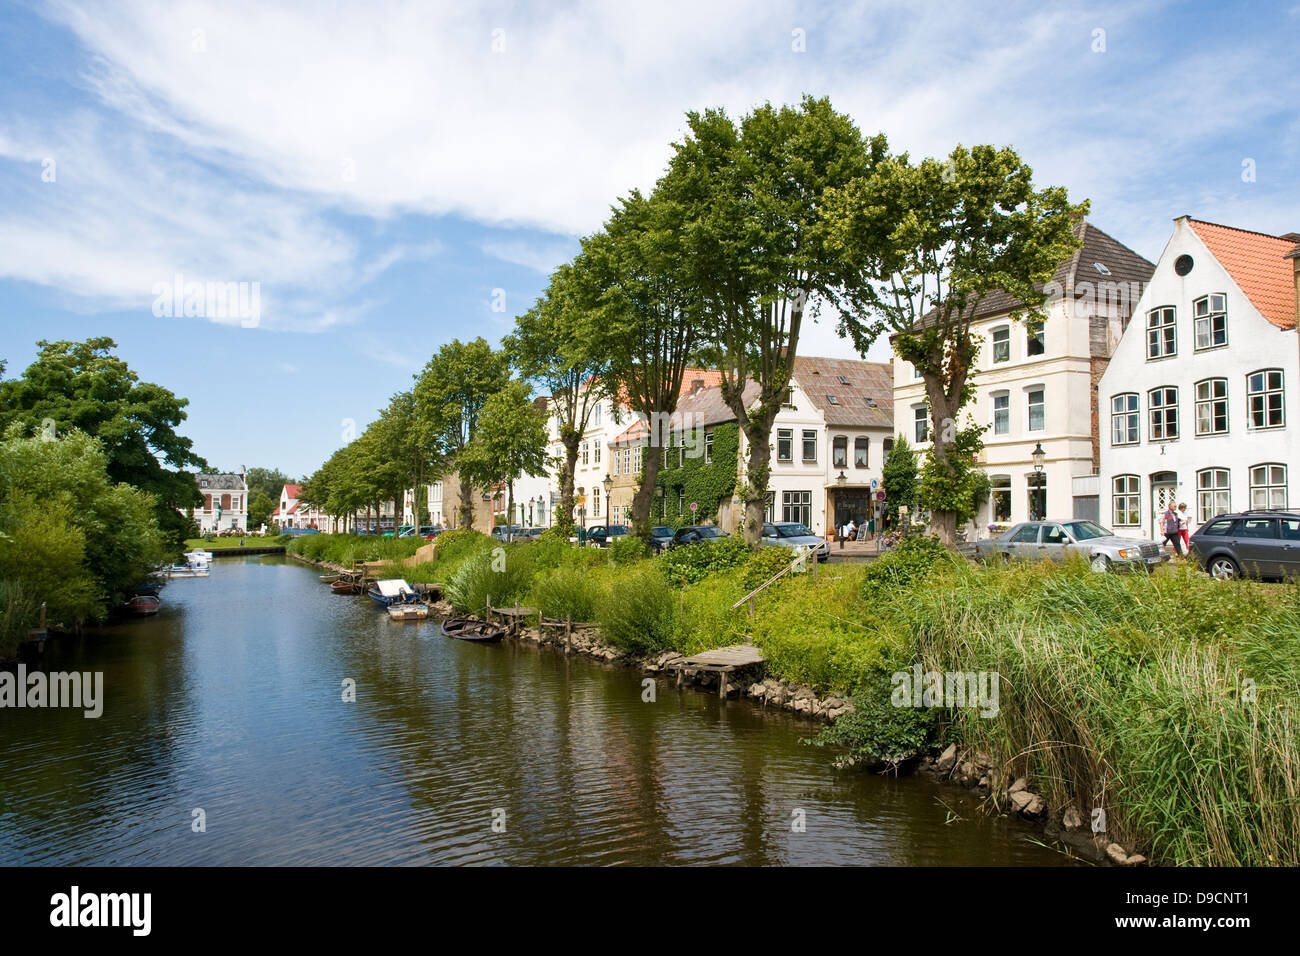 Canals in Friedrich's town, Canals in Friedrichstadt Stock Photo